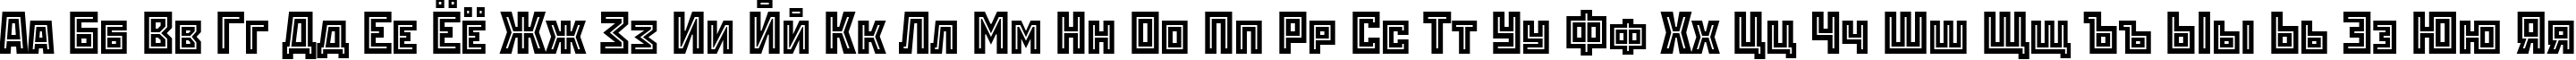 Пример написания русского алфавита шрифтом RodchenkoInlineCTT